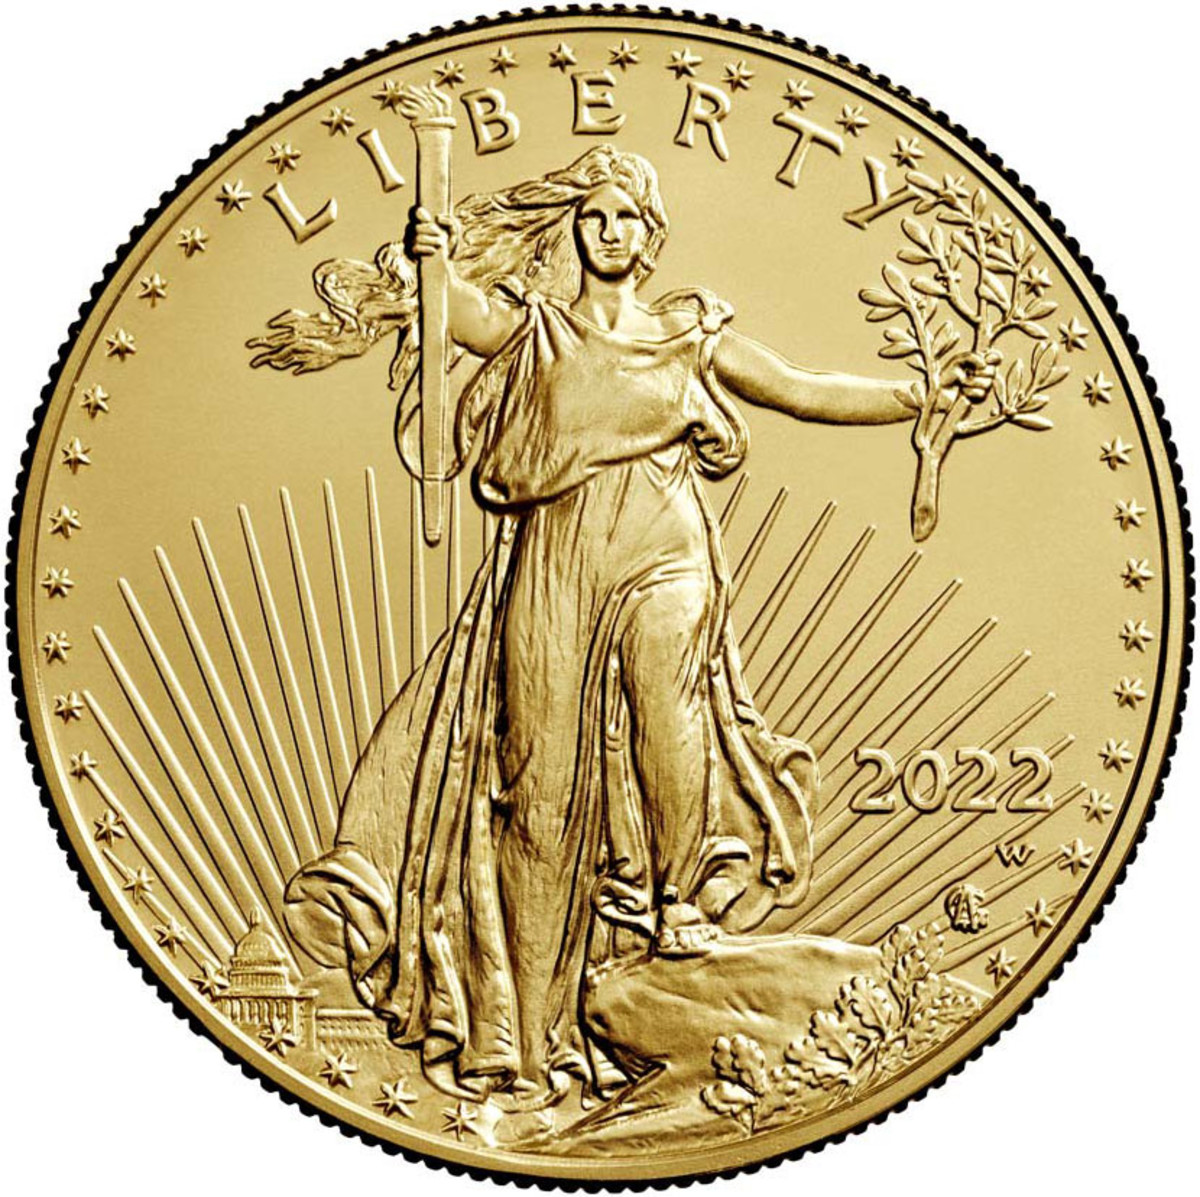 Mint Statistics: Unc. Gold, Mankiller Quarter Debut